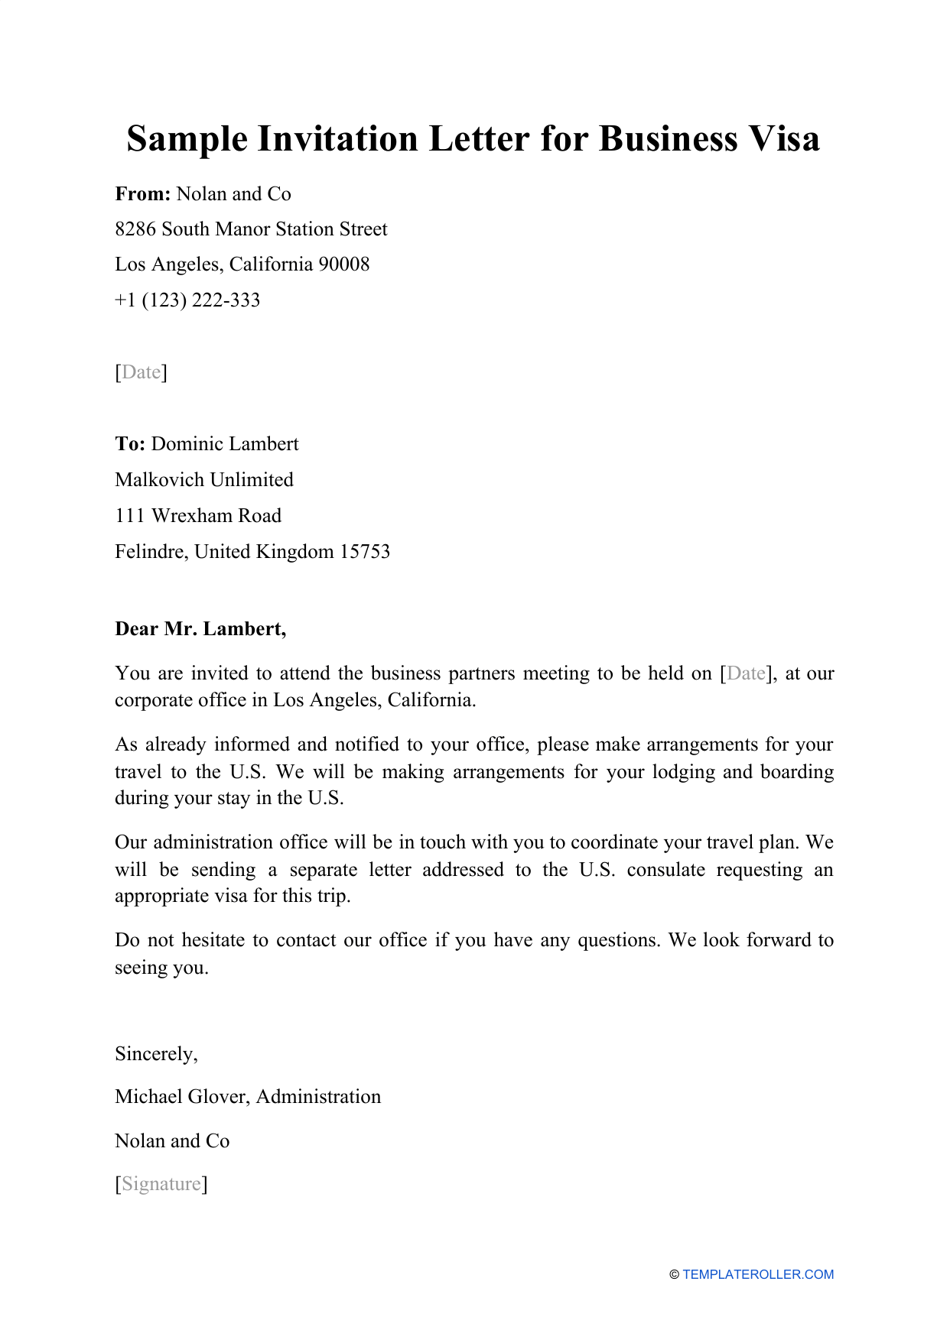 Sample Invitation Letter for Business Visa, Page 1